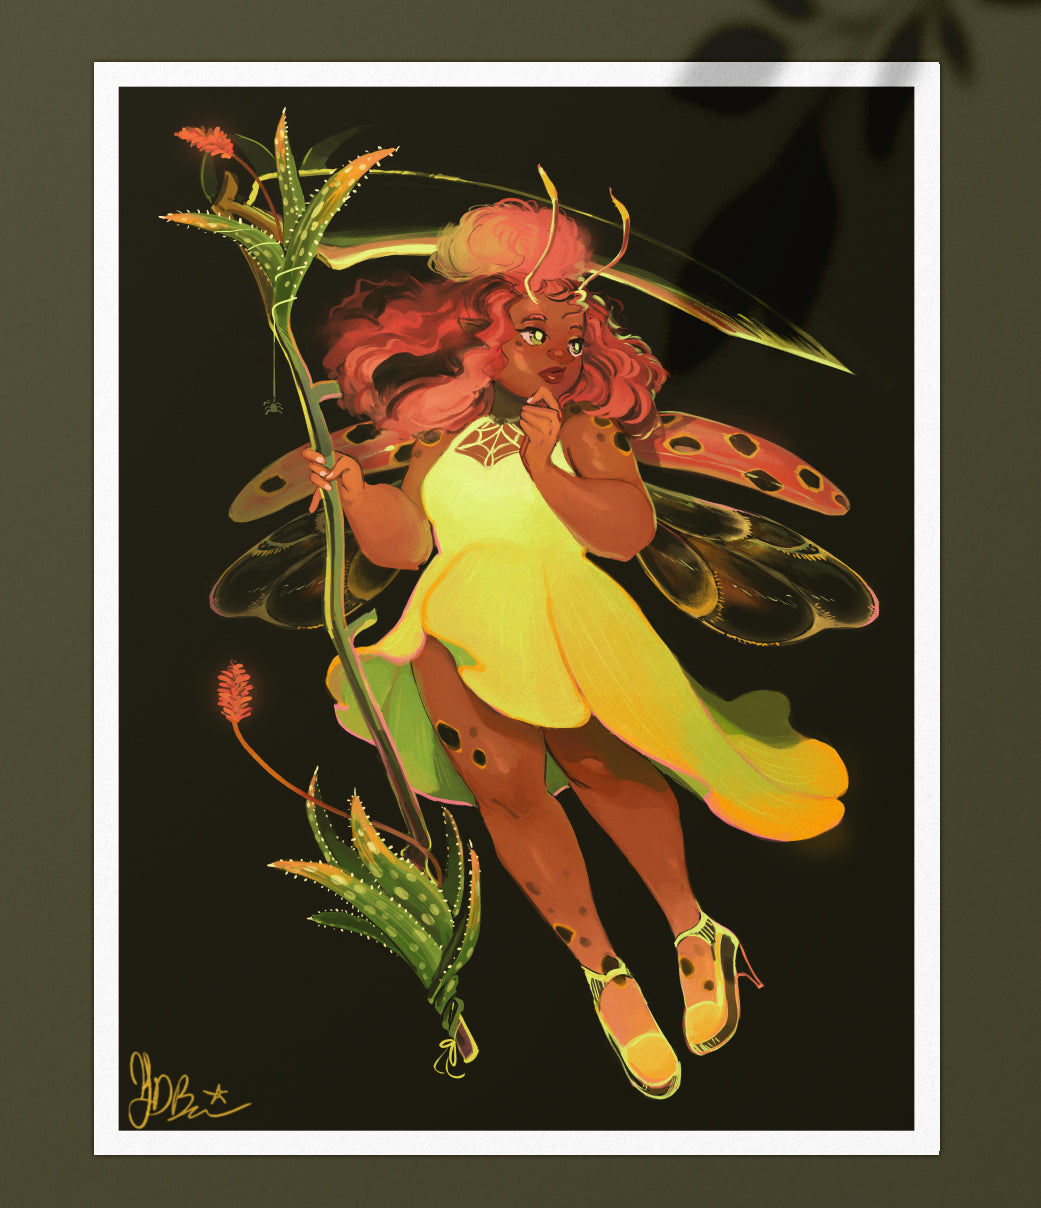 Weapon fairy #11 / Scythe + Aloe Vera